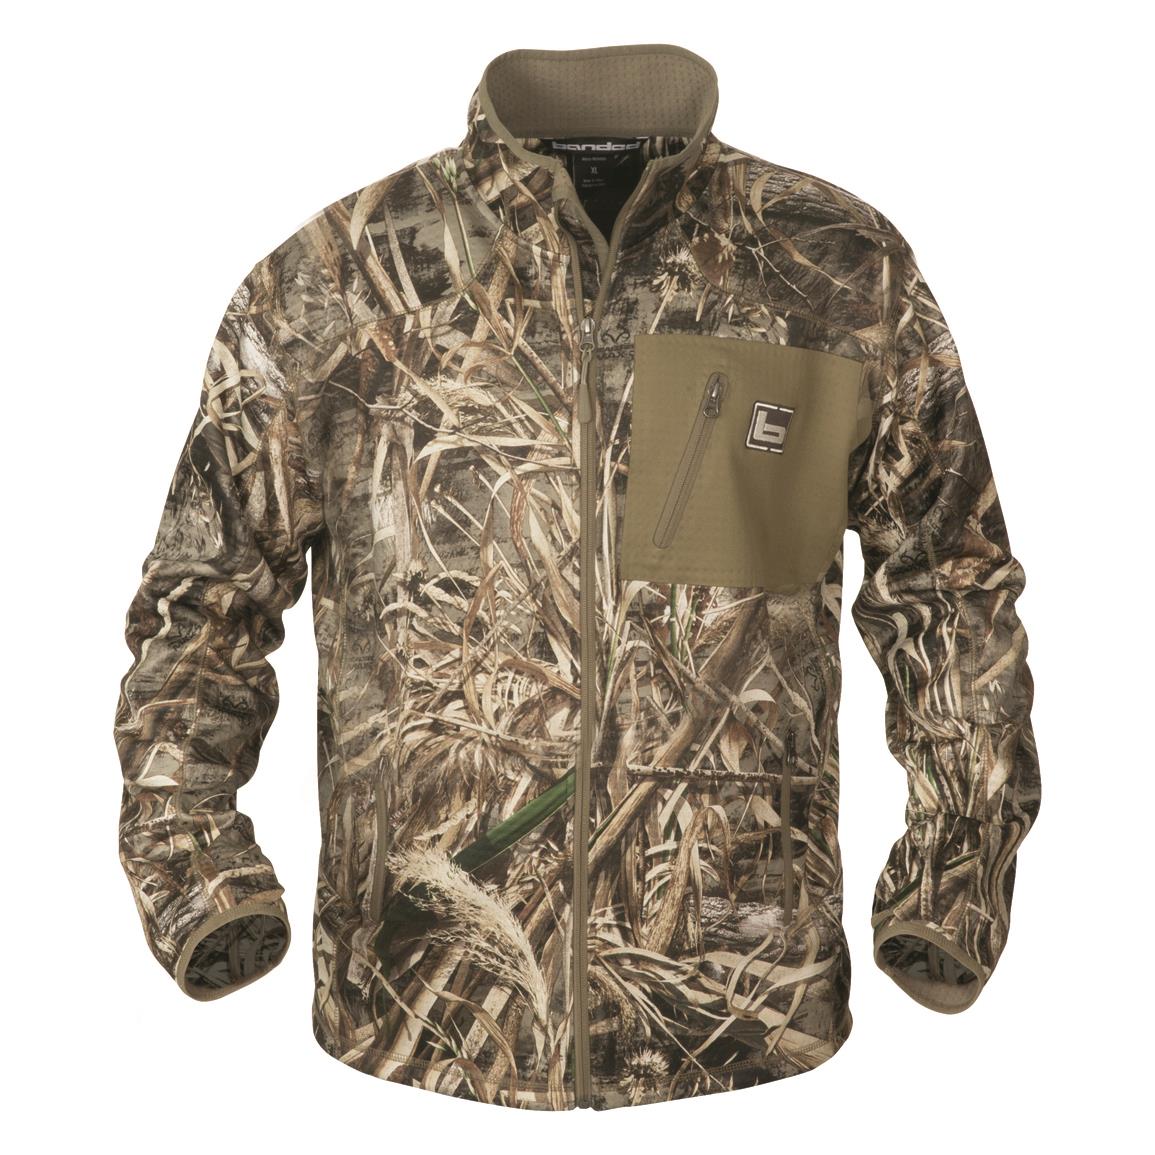 Banded Mid-layer Full-Zip Fleece Jacket, Max 7